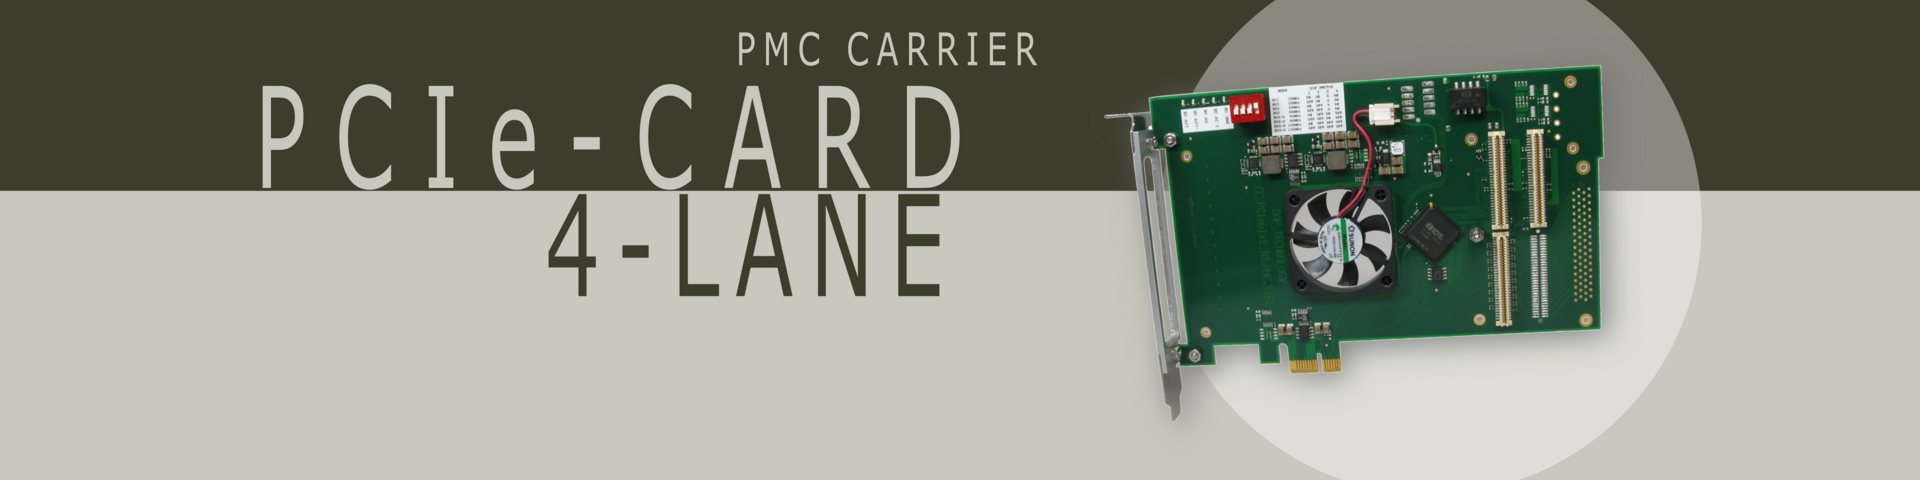 Accessories - PMC-Carrier PCIex4